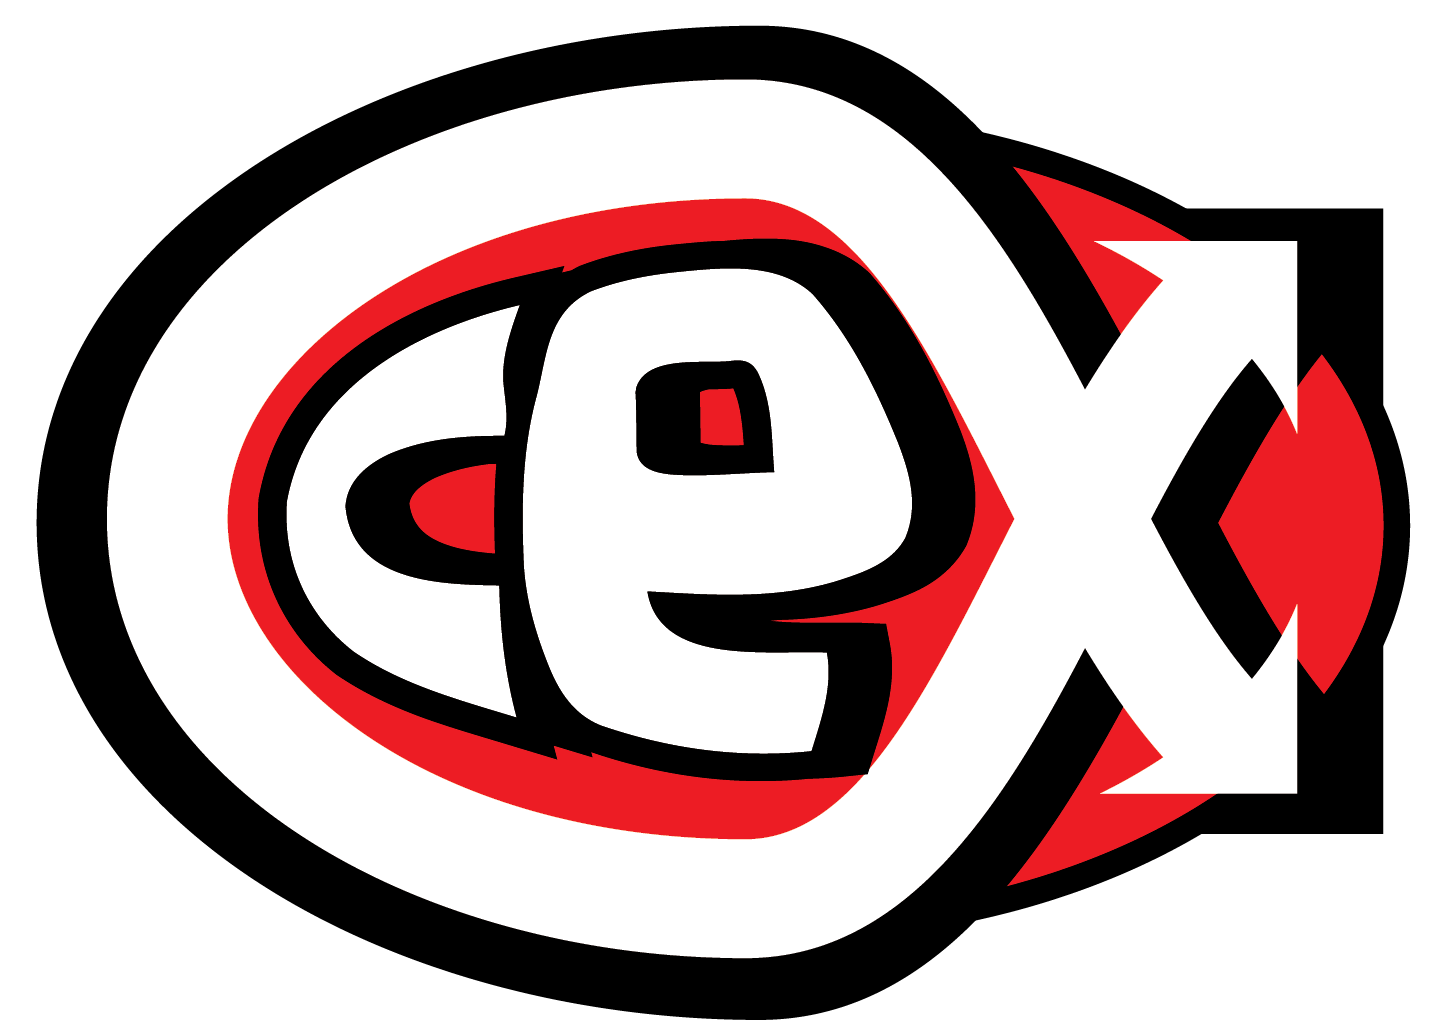 CeX_Logo_Rich_black_RGB-01